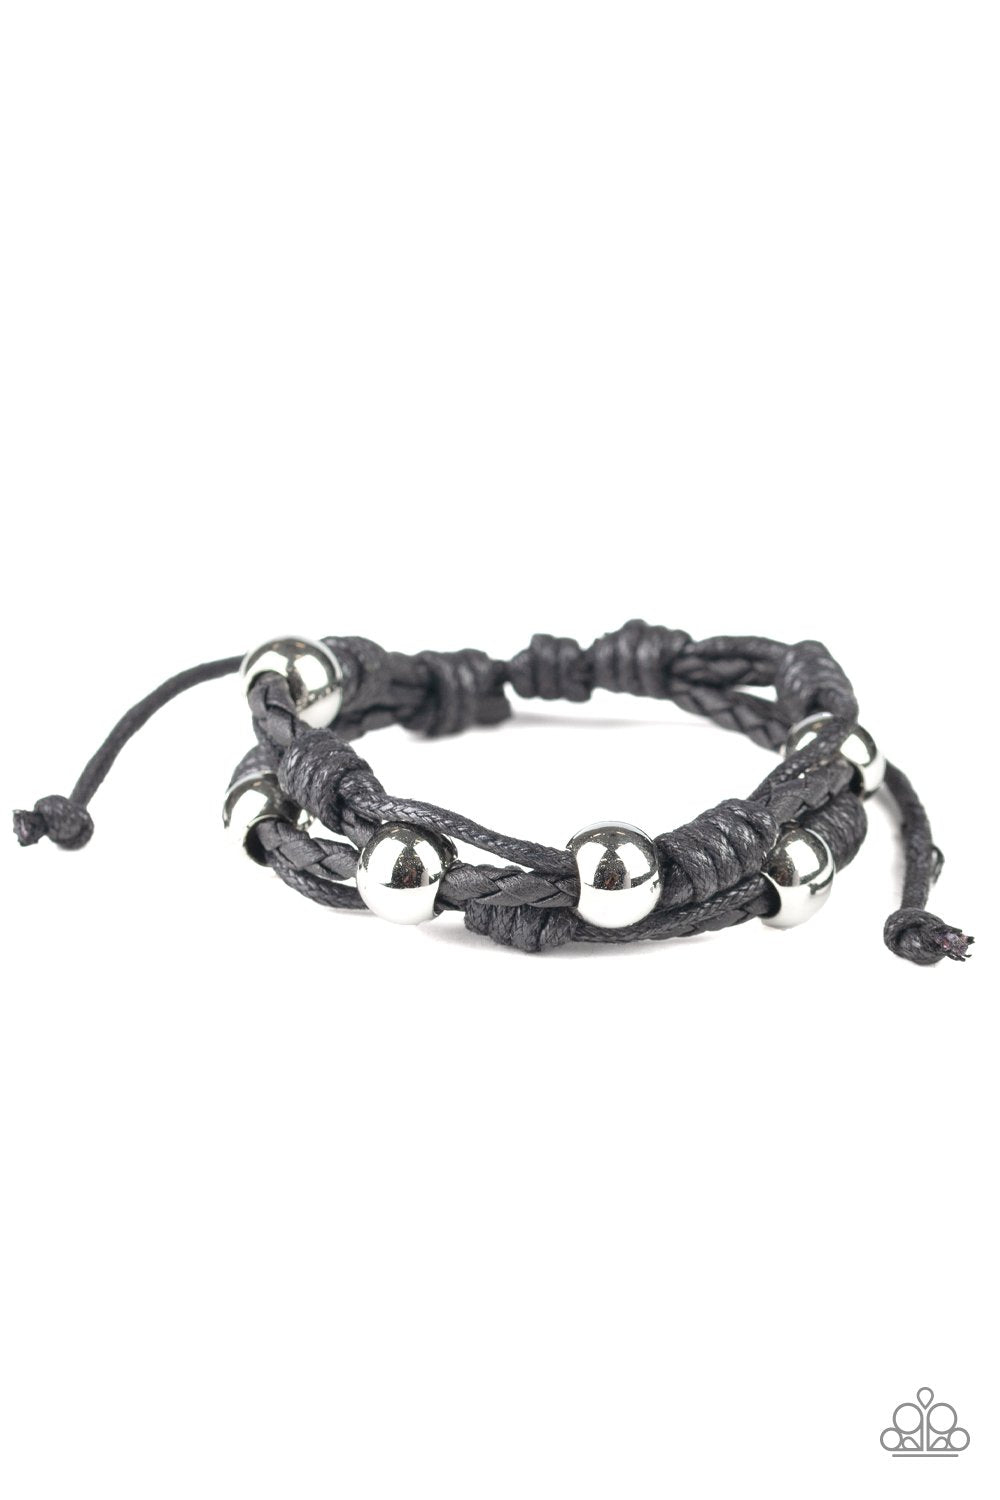 Free Climb Black and Silver Urban Knot Bracelet - Paparazzi Accessories-CarasShop.com - $5 Jewelry by Cara Jewels